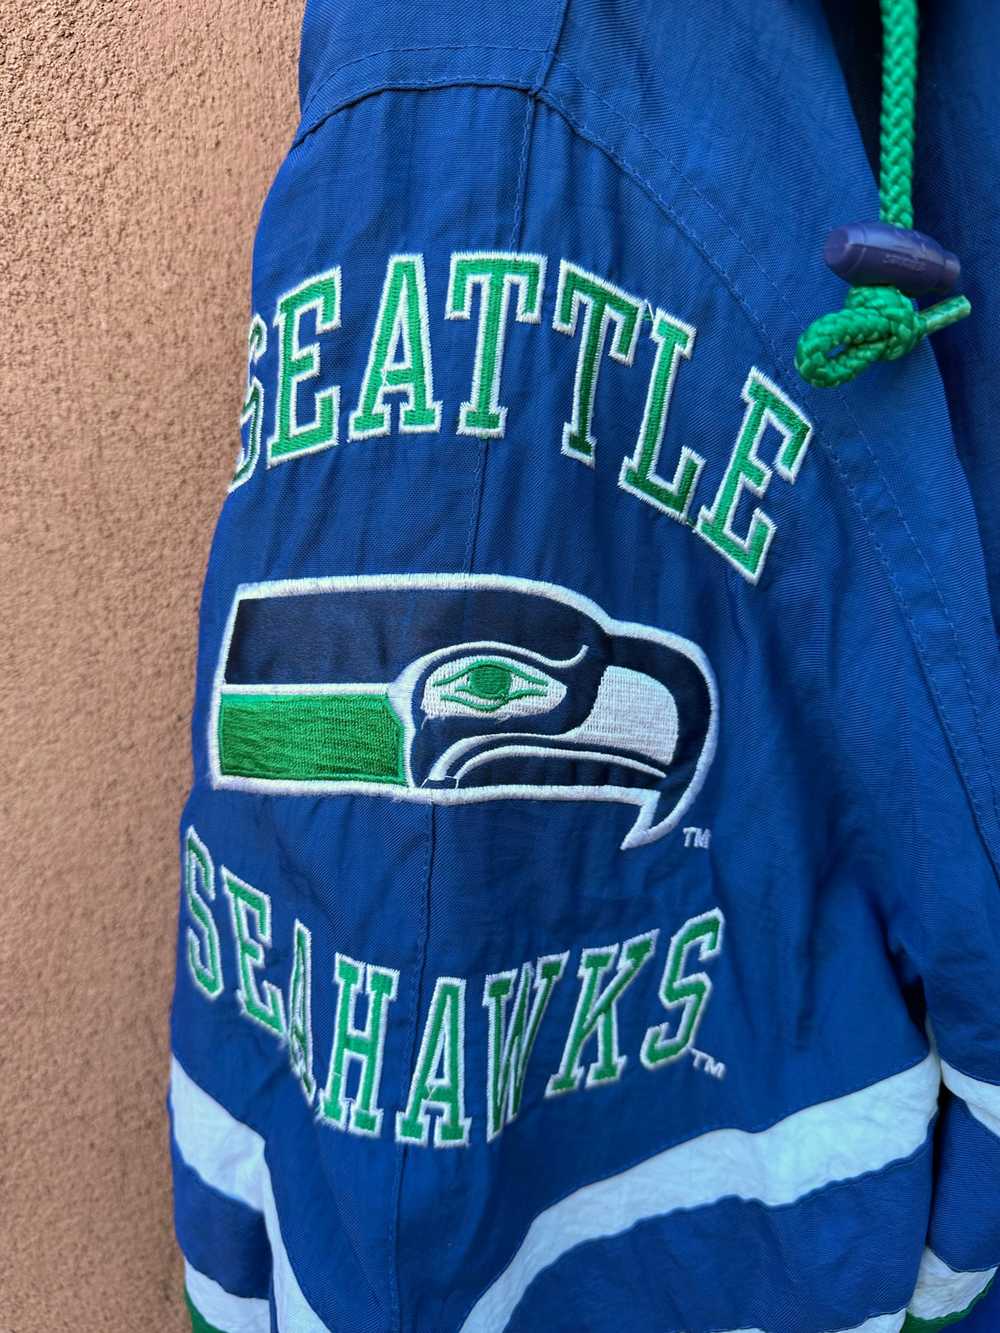 Seattle Seahawks Pro Line Jacket - image 3